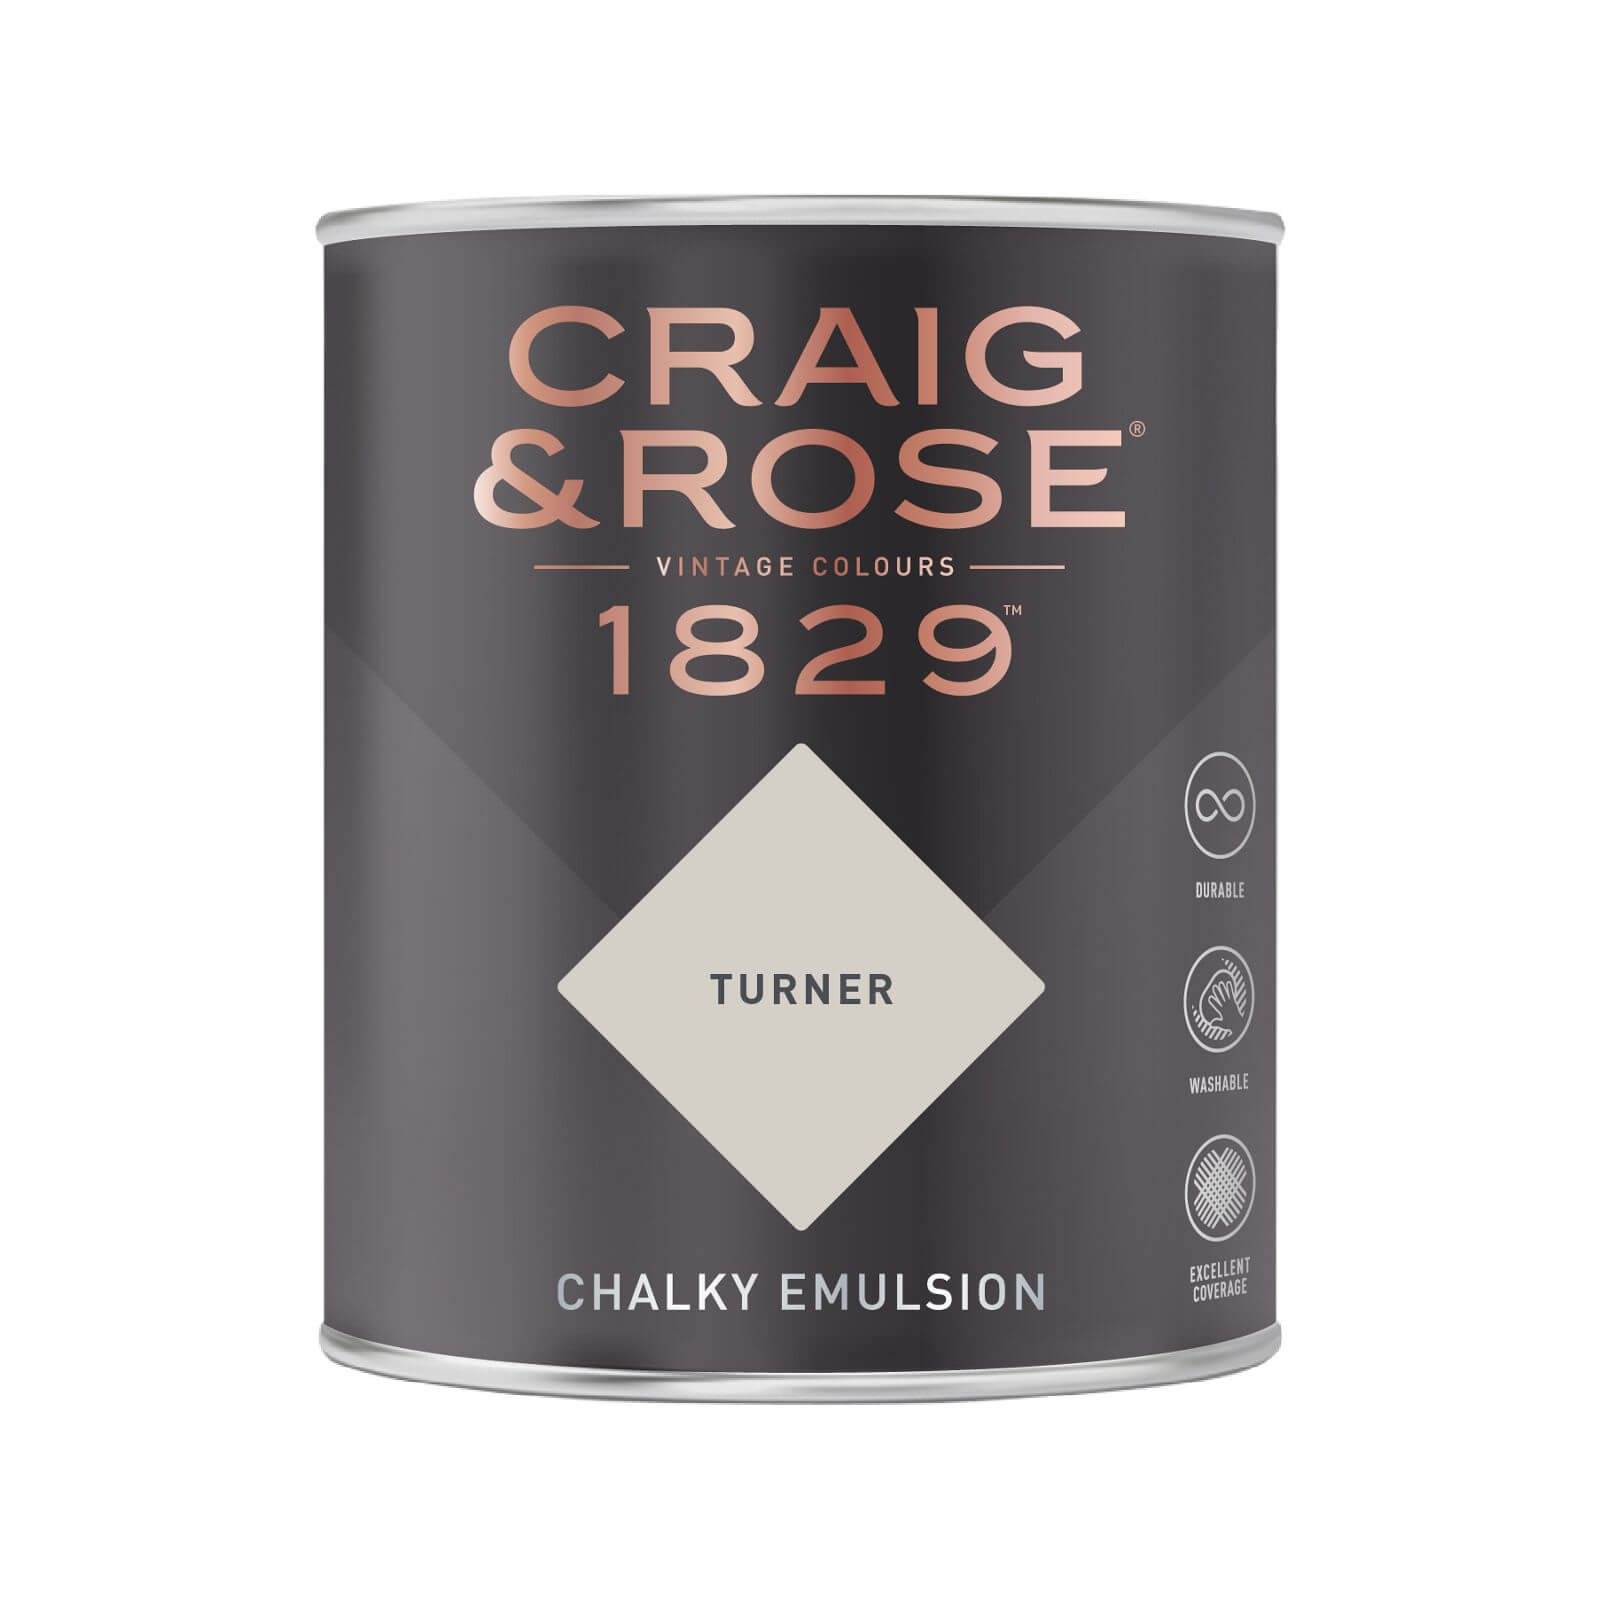 Craig & Rose 1829 Chalky Emulsion Paint Turner - 750ml